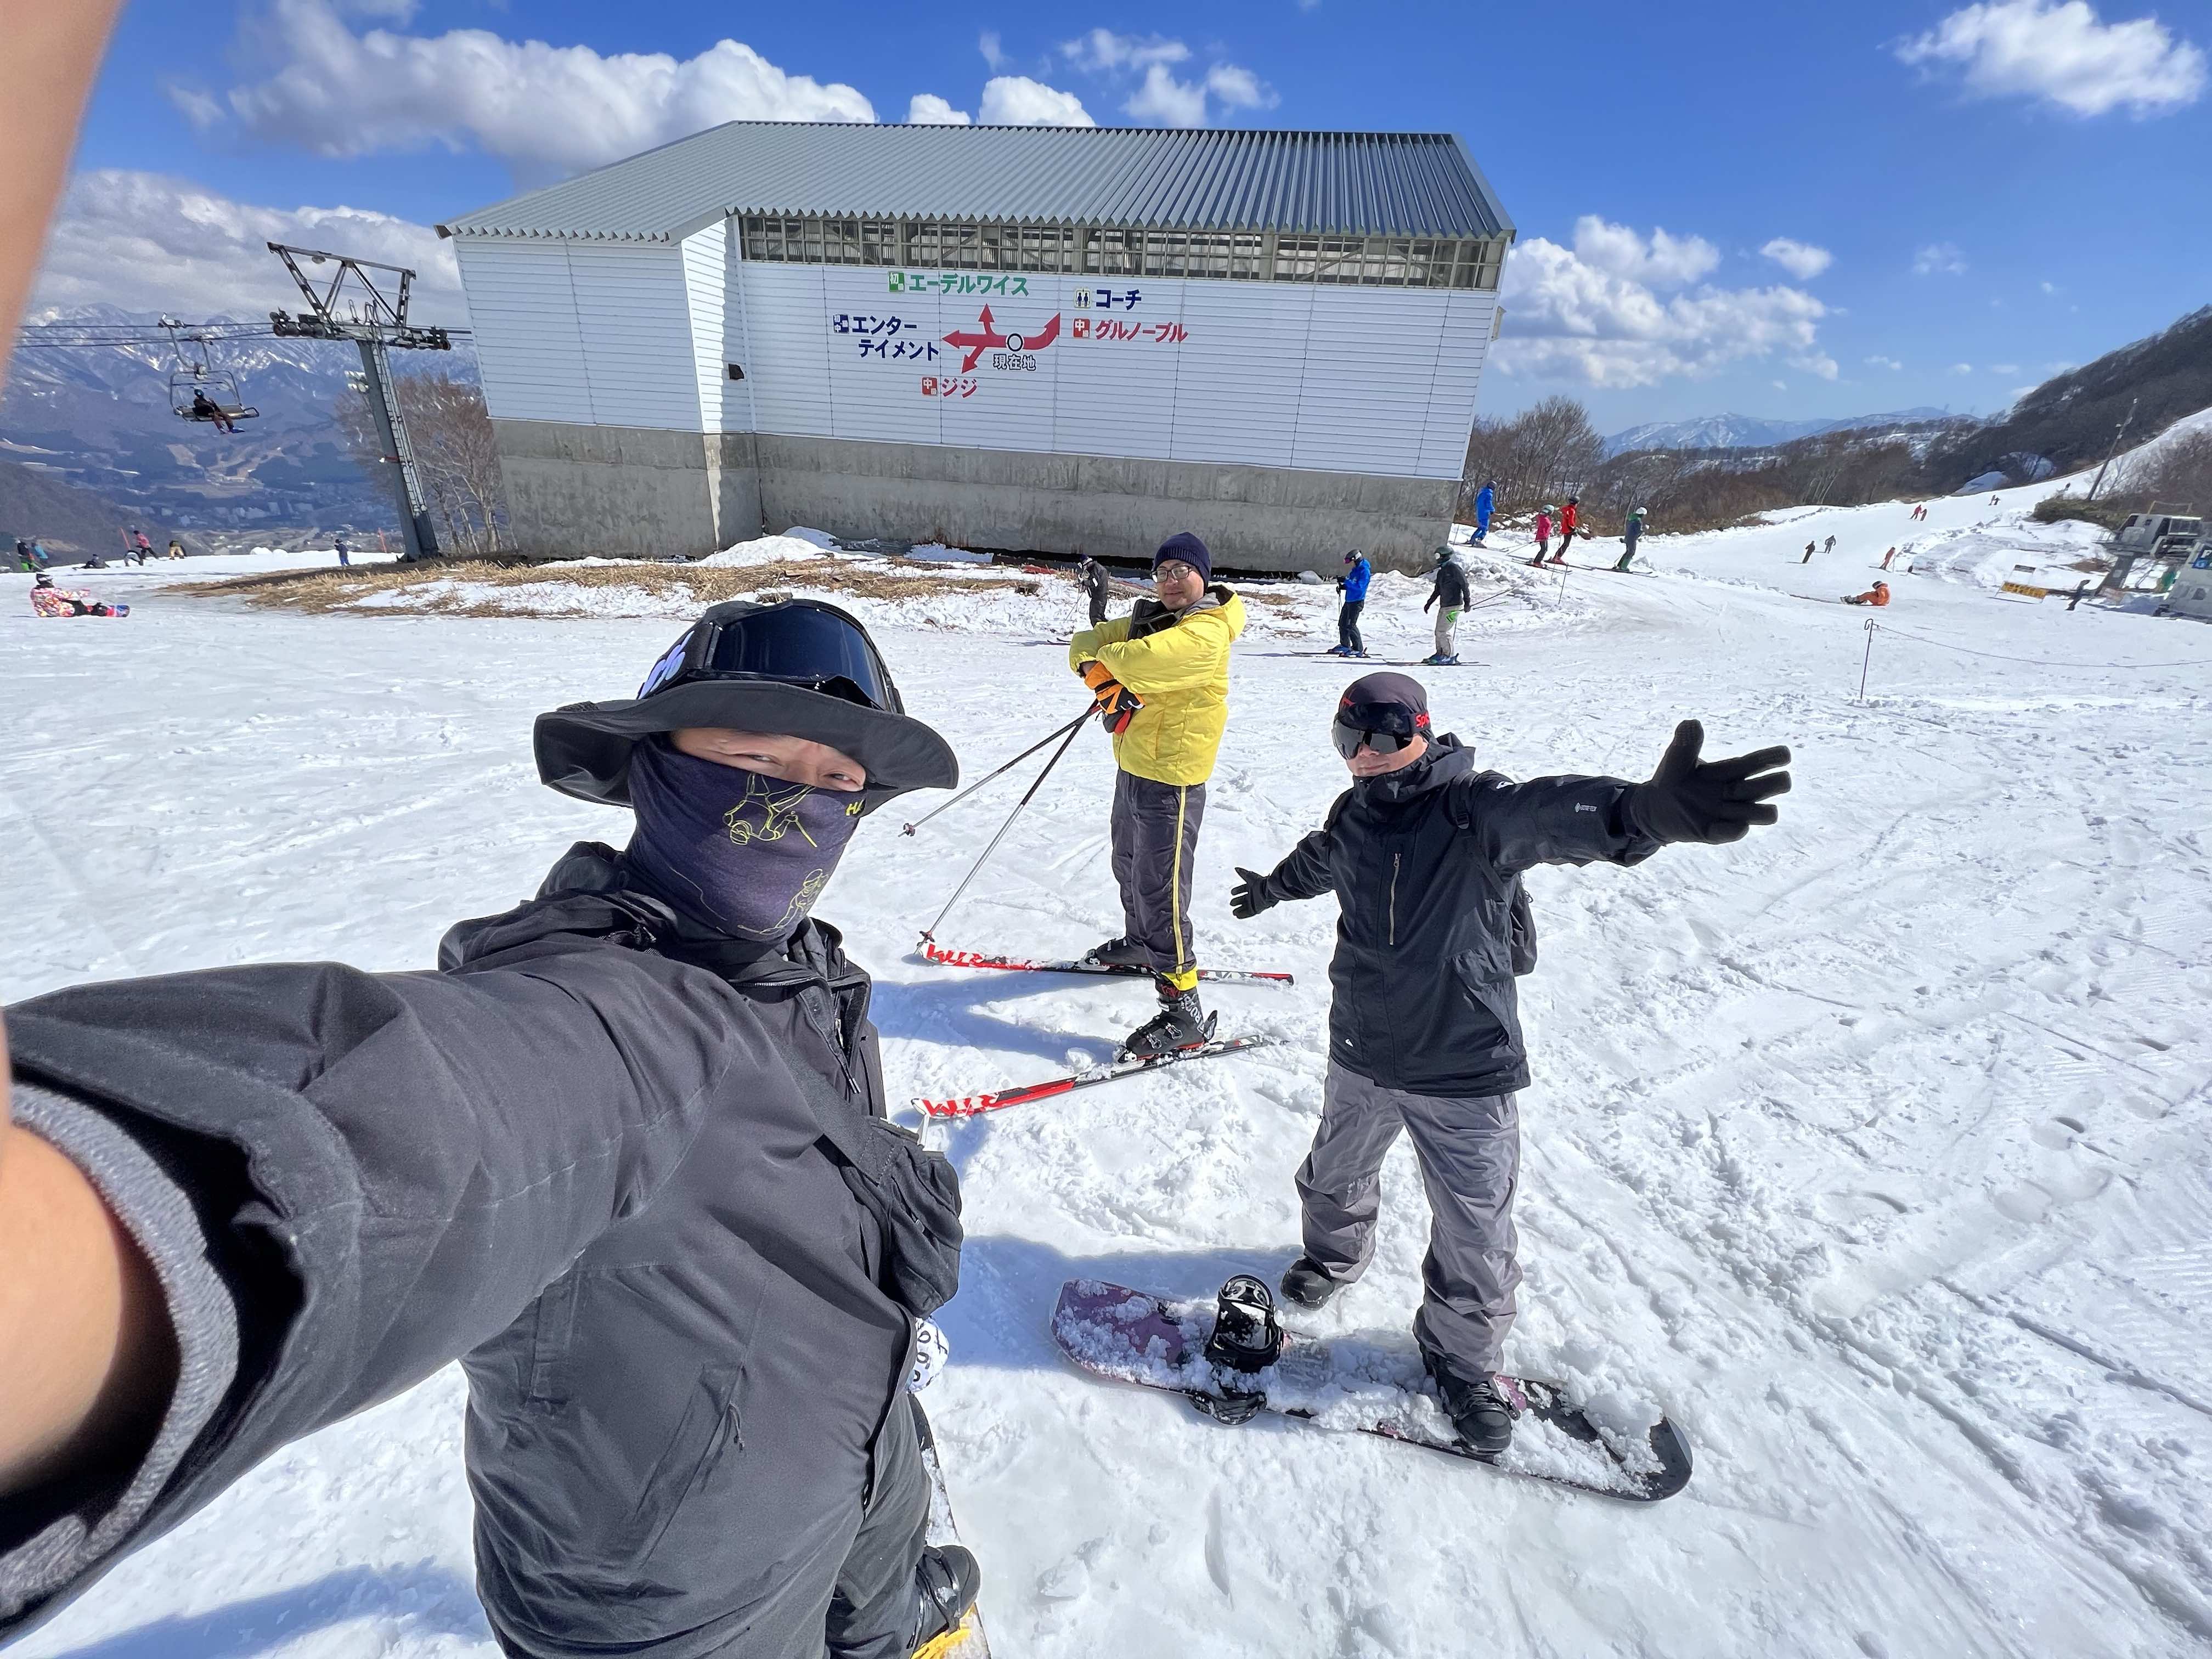 GALA 湯澤滑雪場 Day1